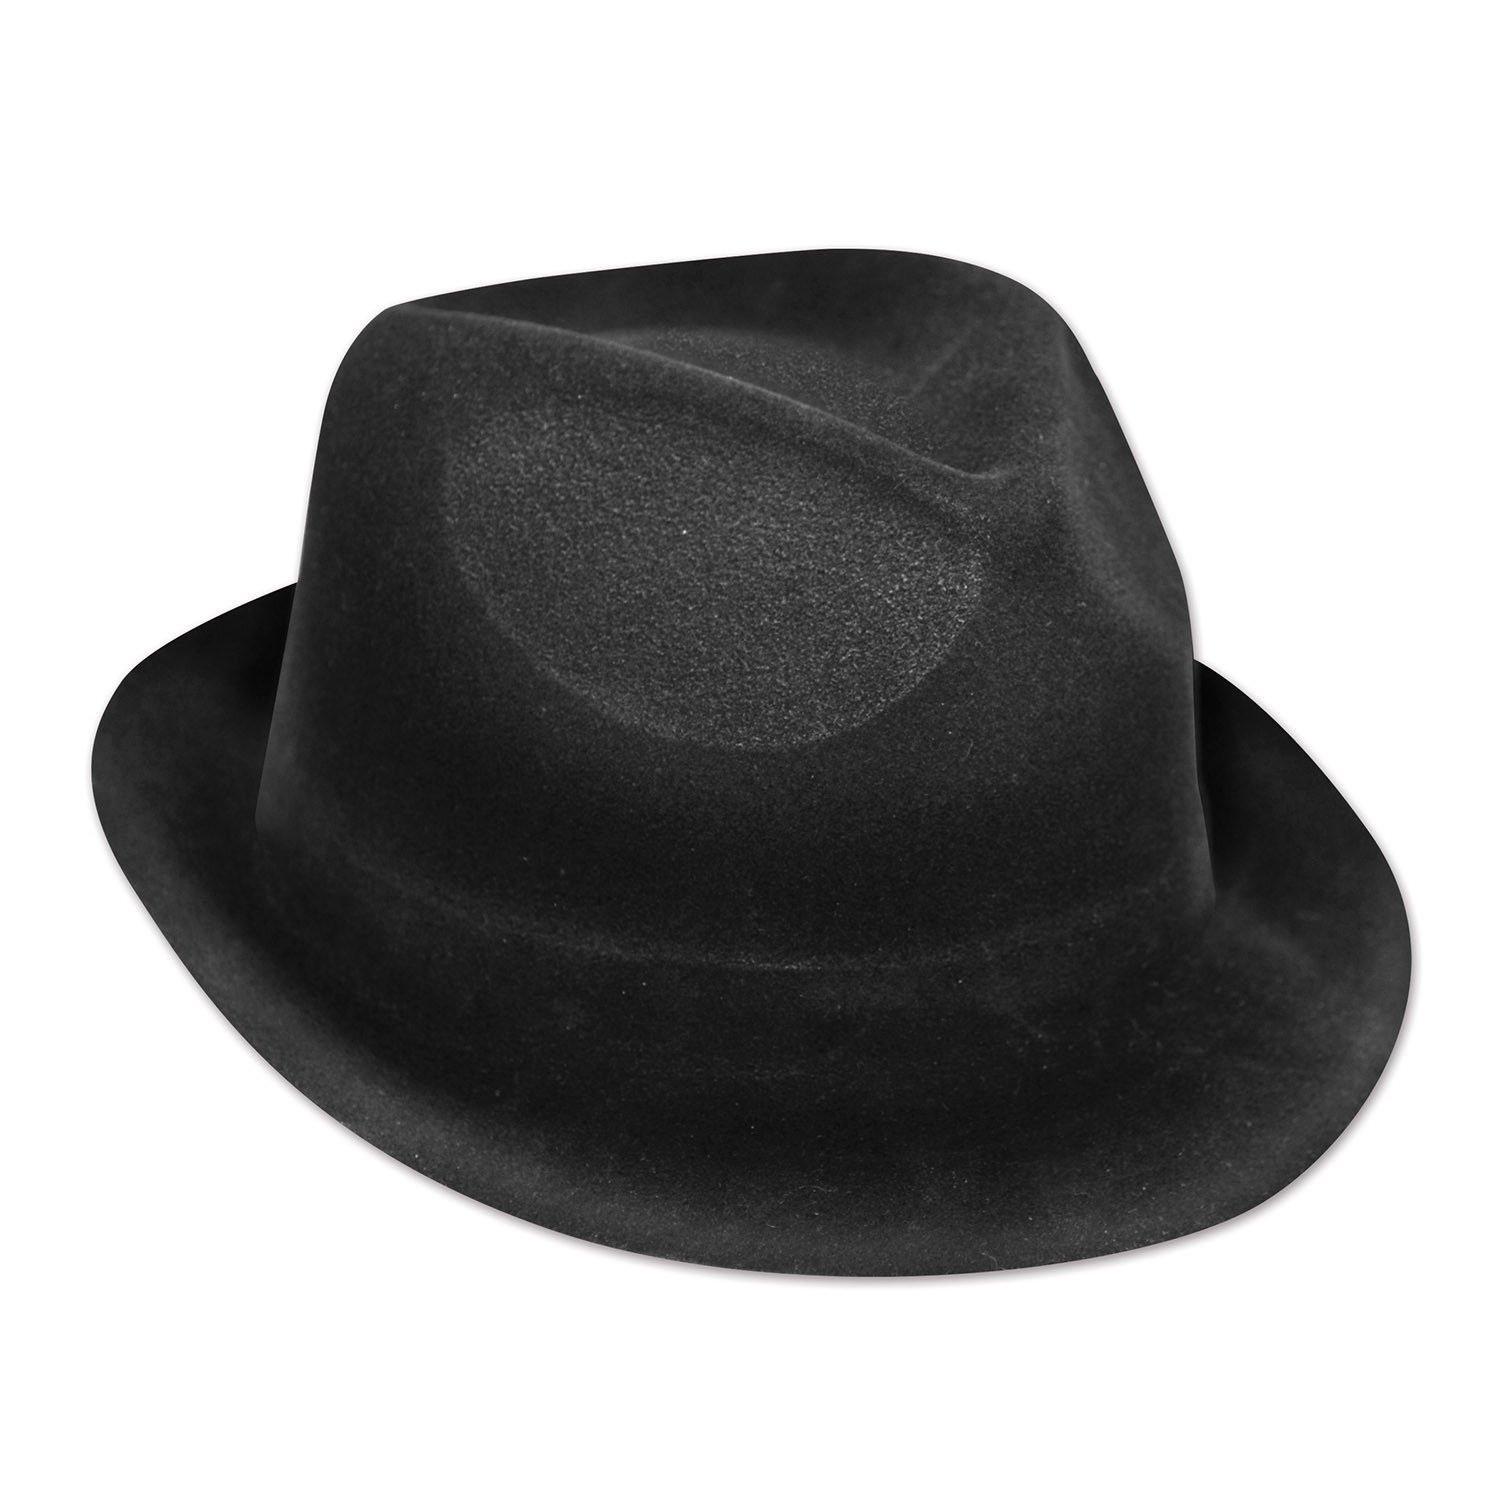 Plastic molded, velour coated, black fedora hat. 